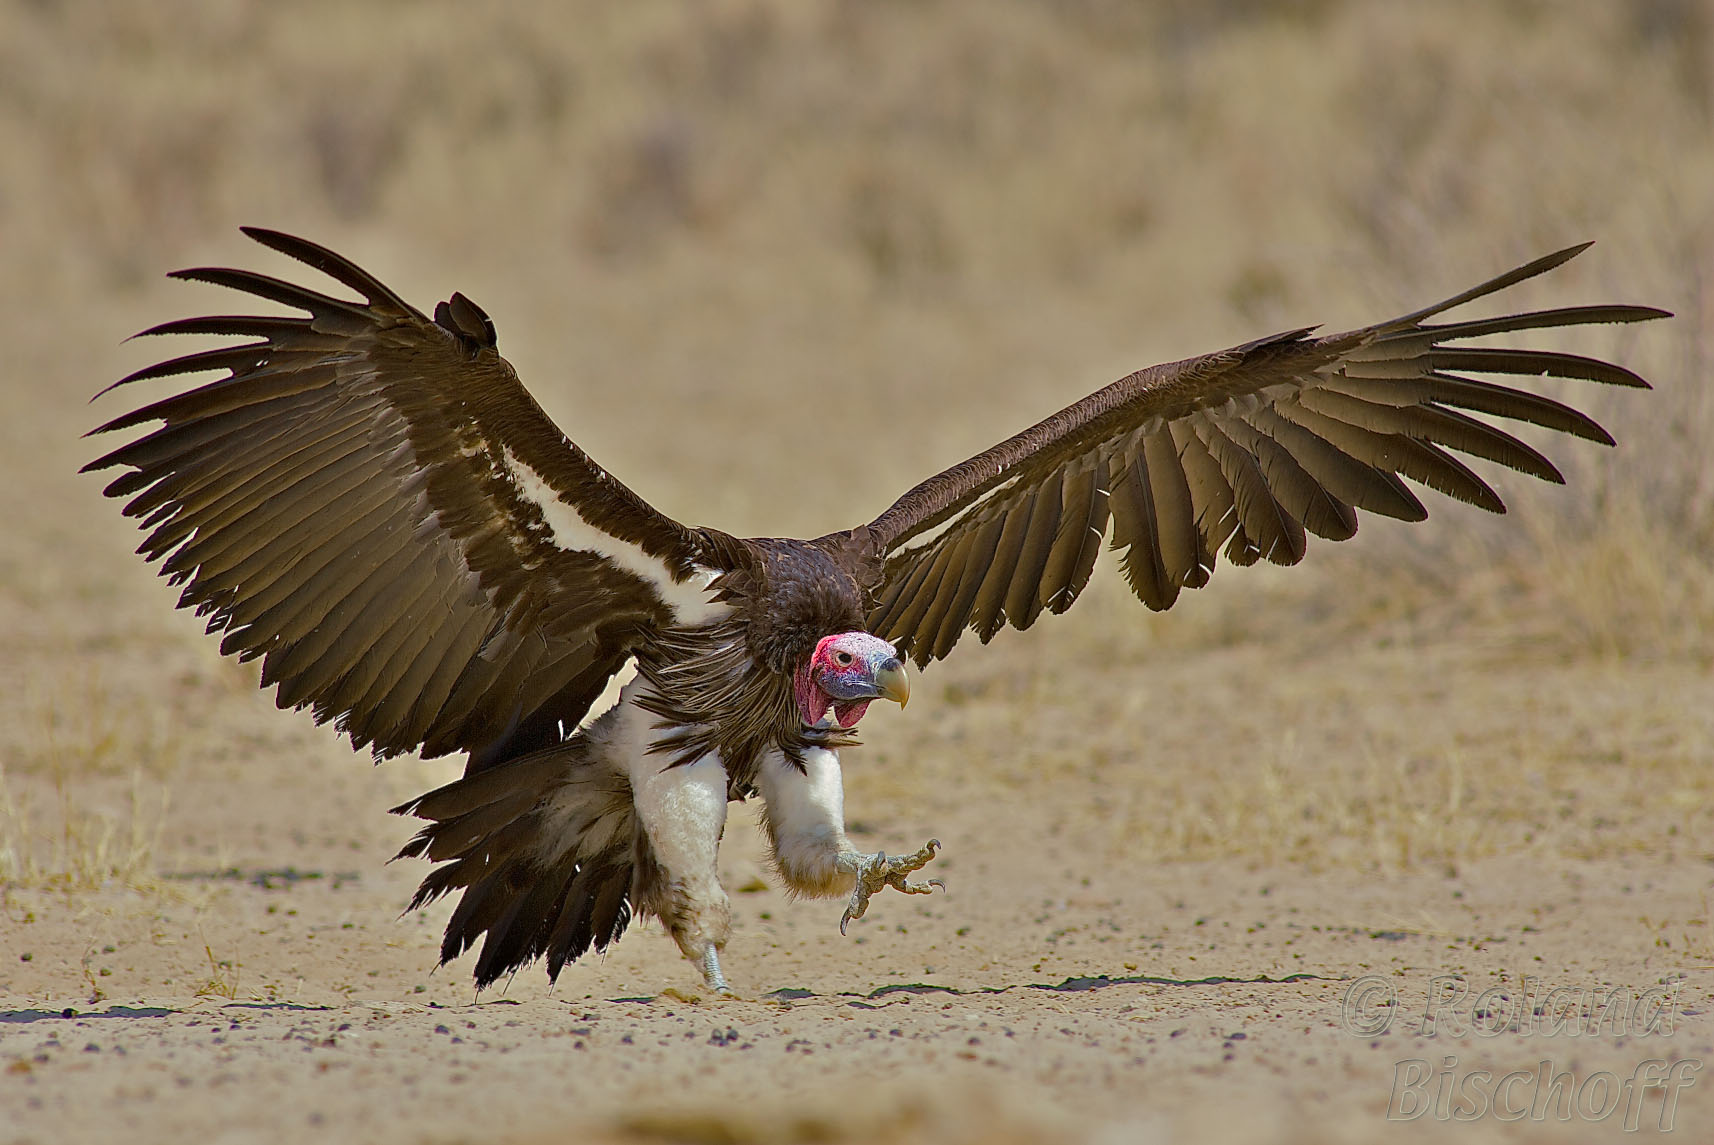 Pretty Lappet-faced vulture